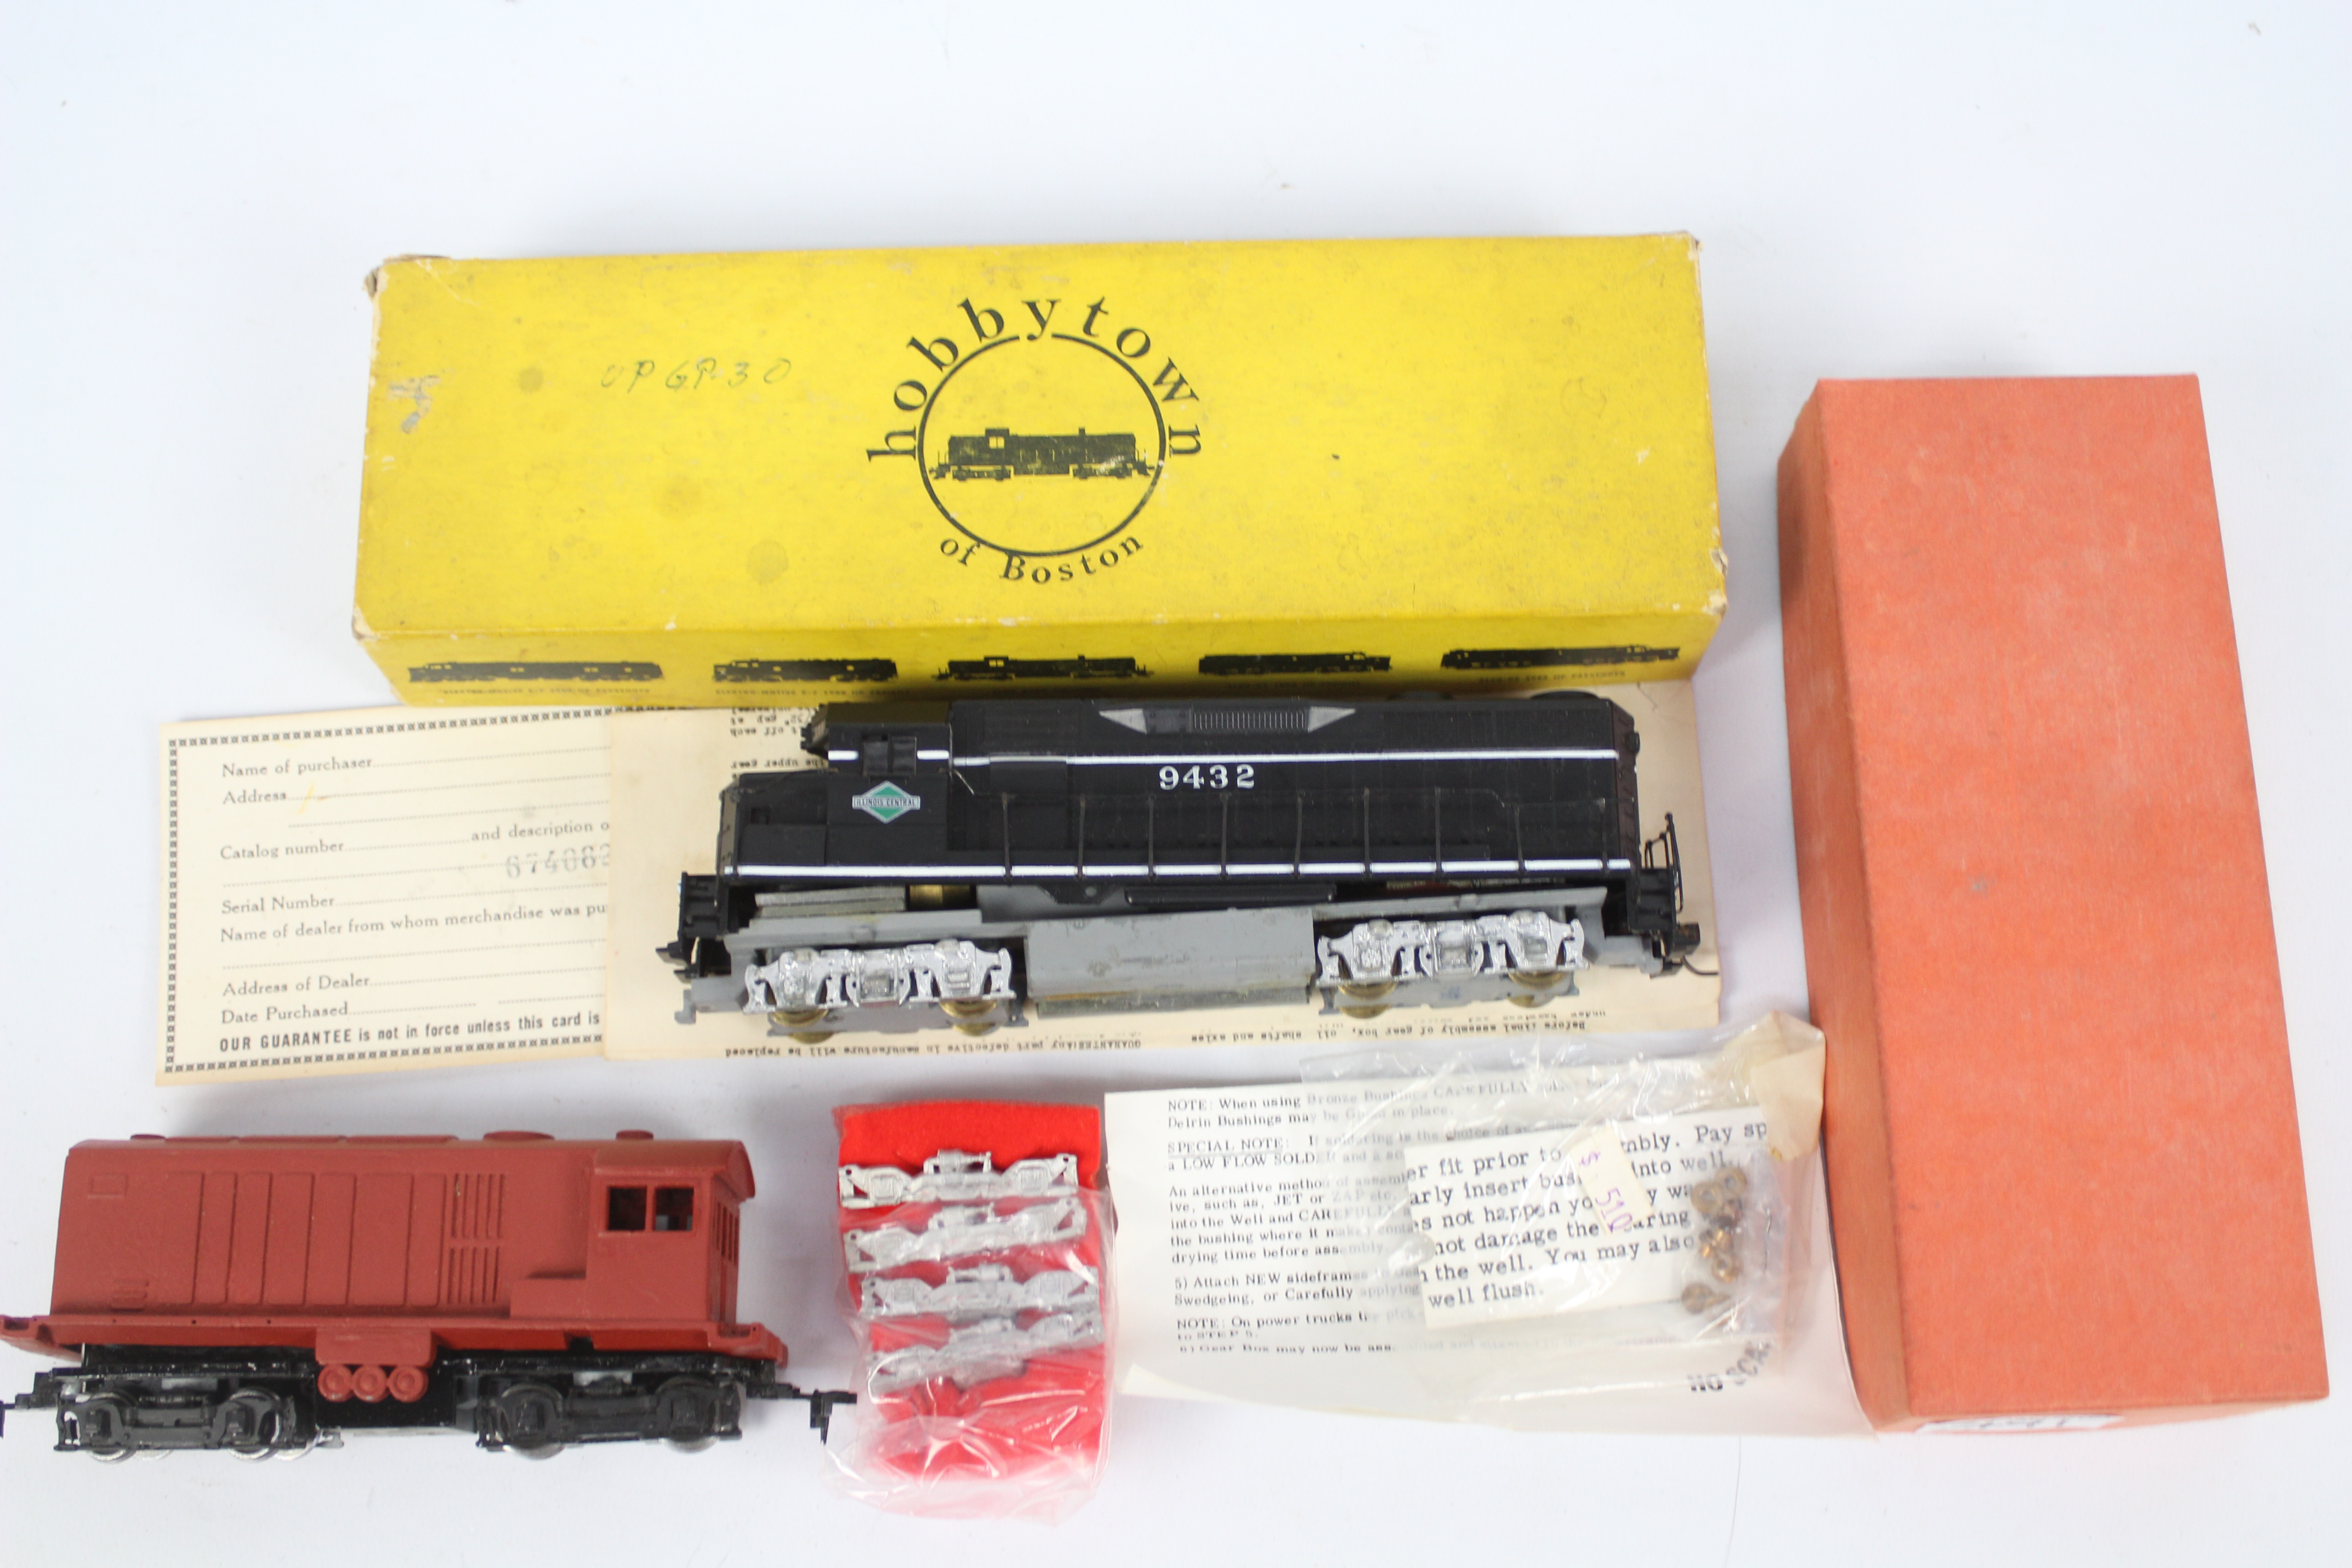 Hobbytown, Trackside Parts - Two HO gauge American locomotive kits.